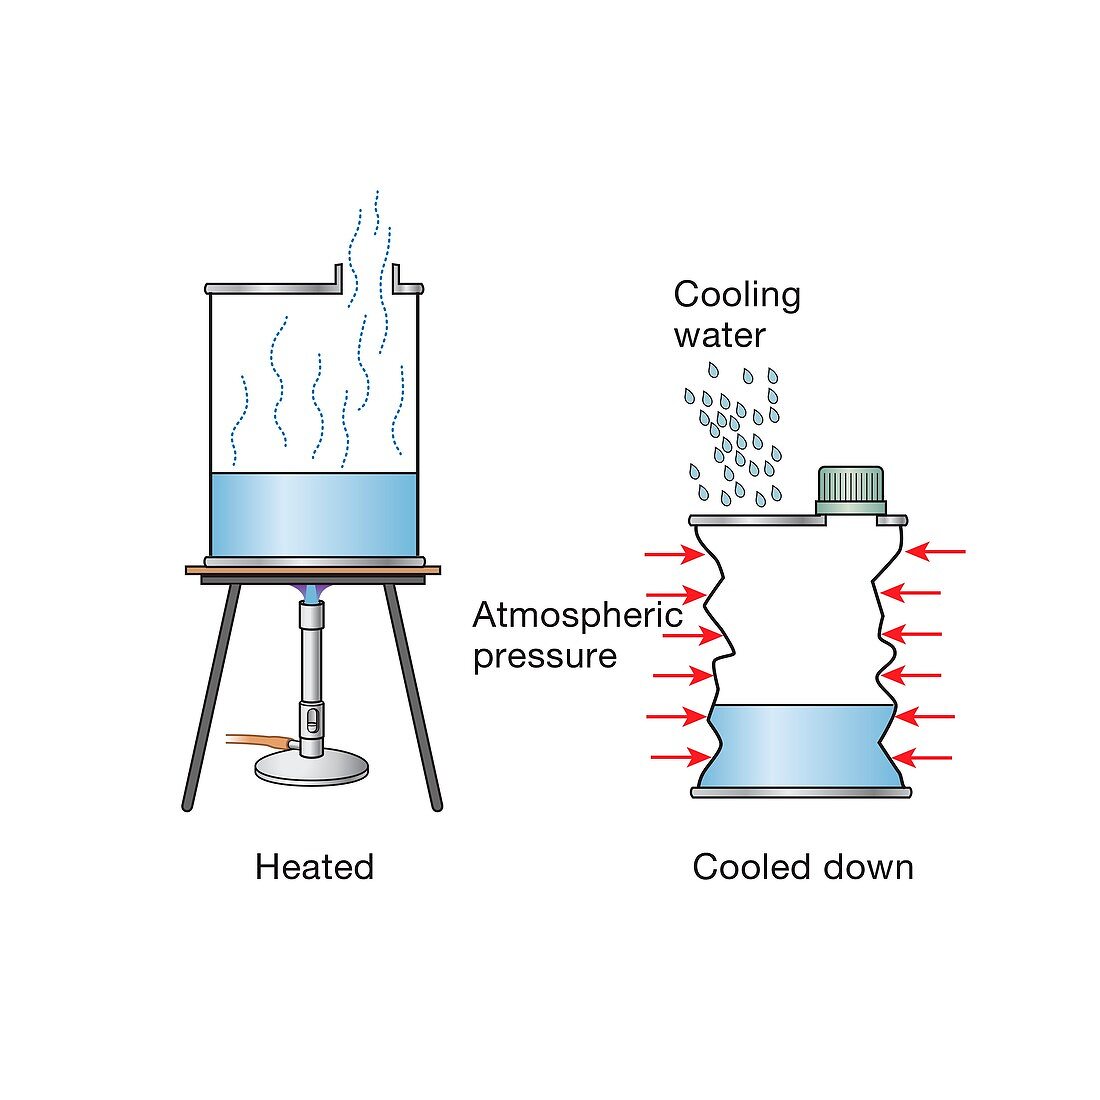 Demonstration of atmospheric pressure, illustration